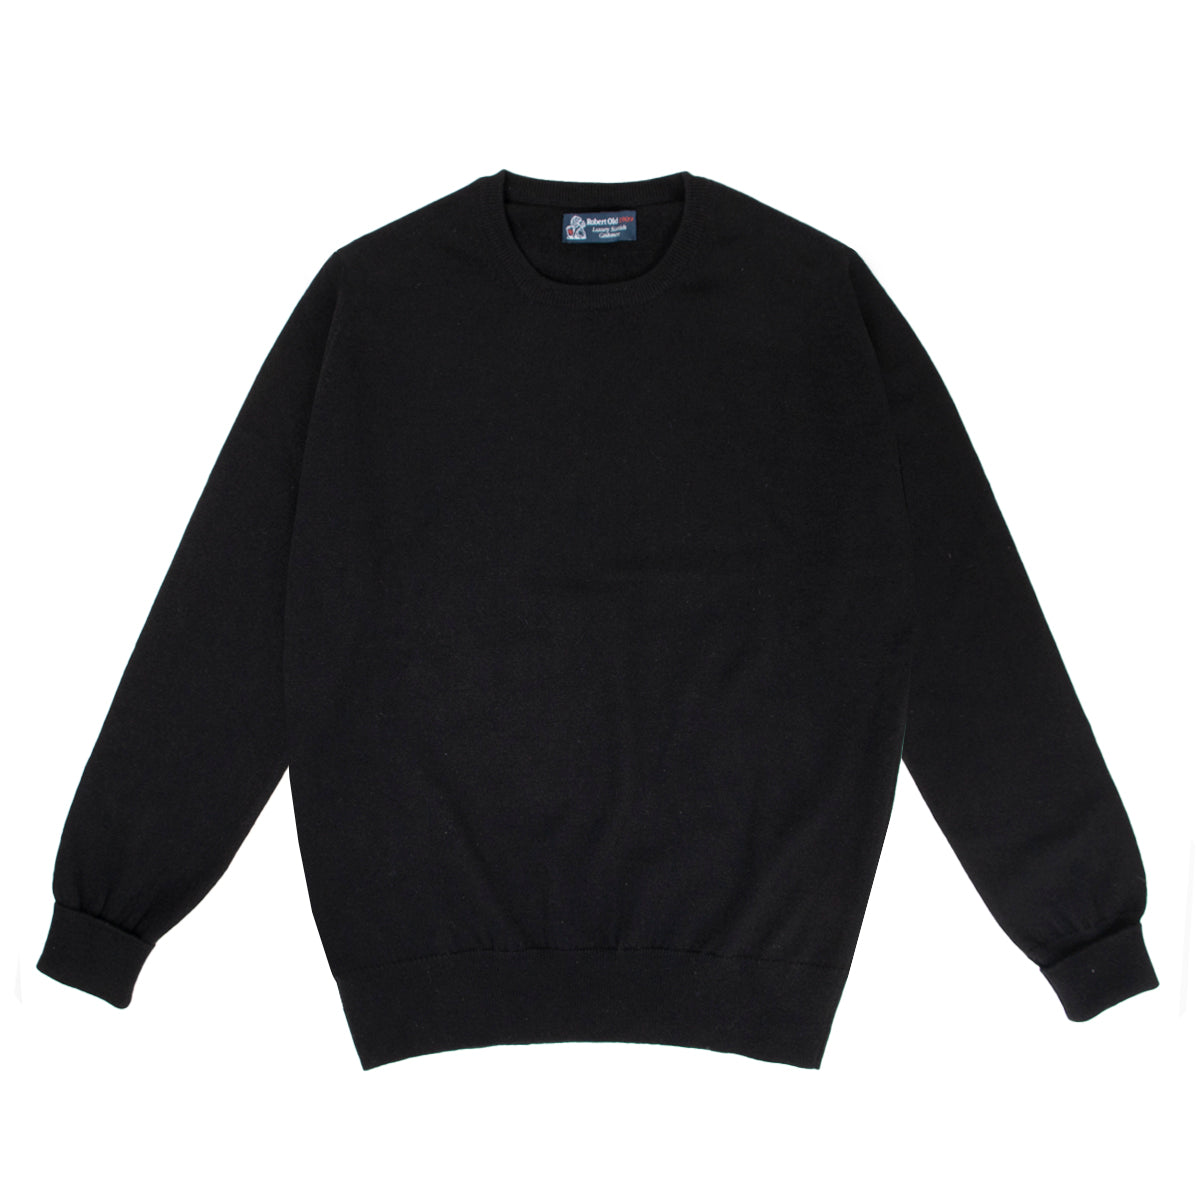 Black Highclere Cashmere Crew Neck Sweater  Robert Old   